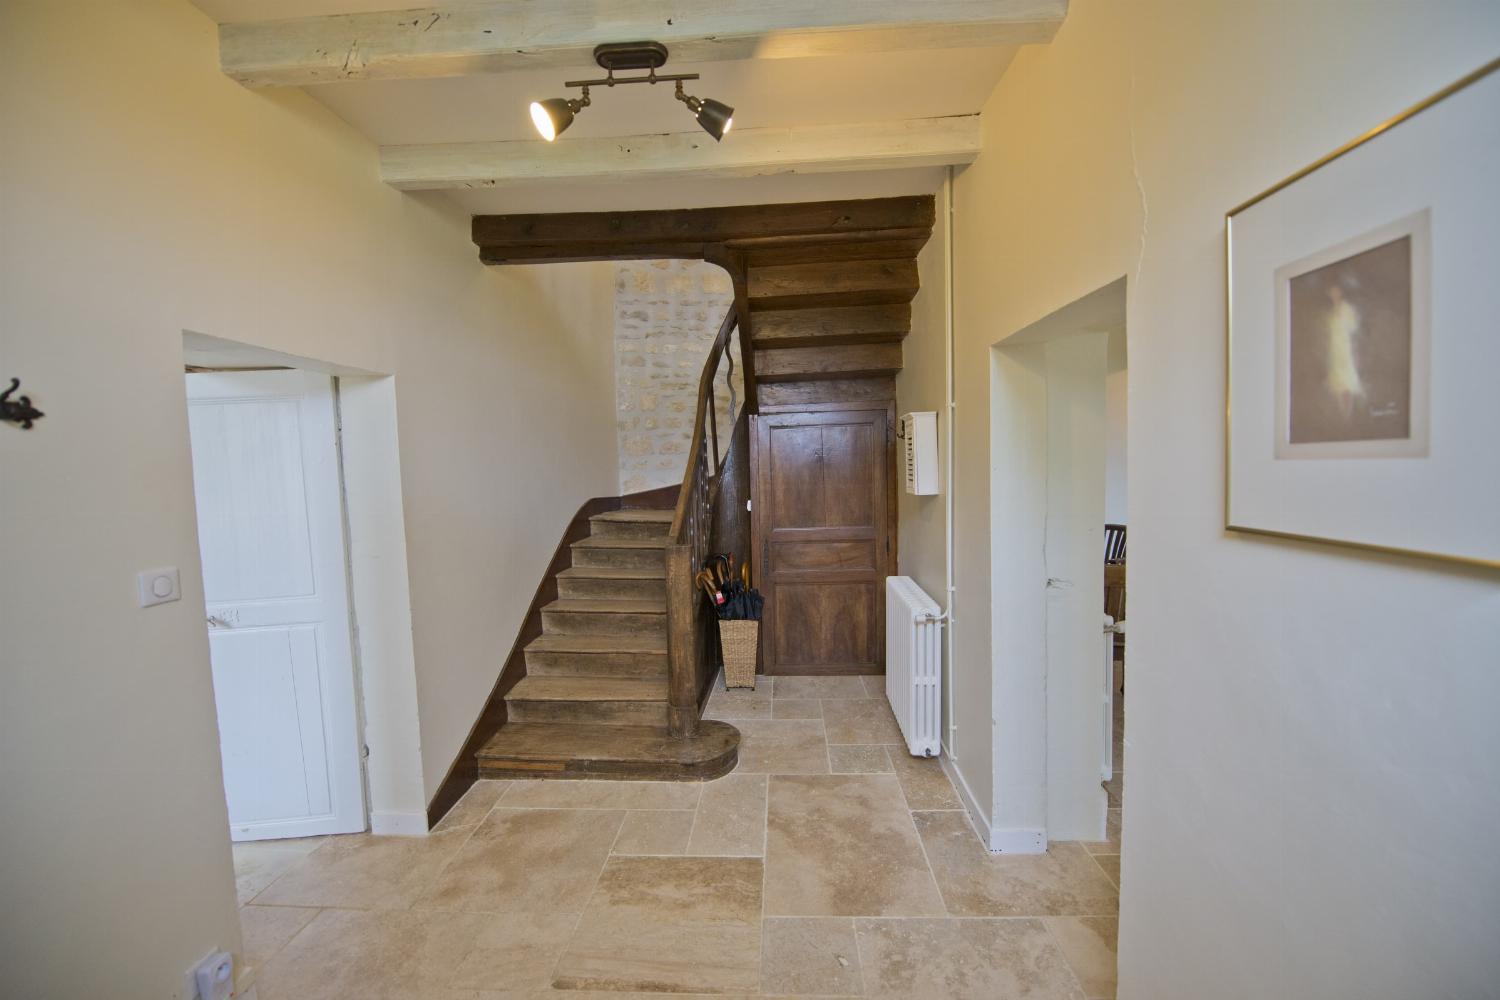 Hallway | Rental accommodation in Charente